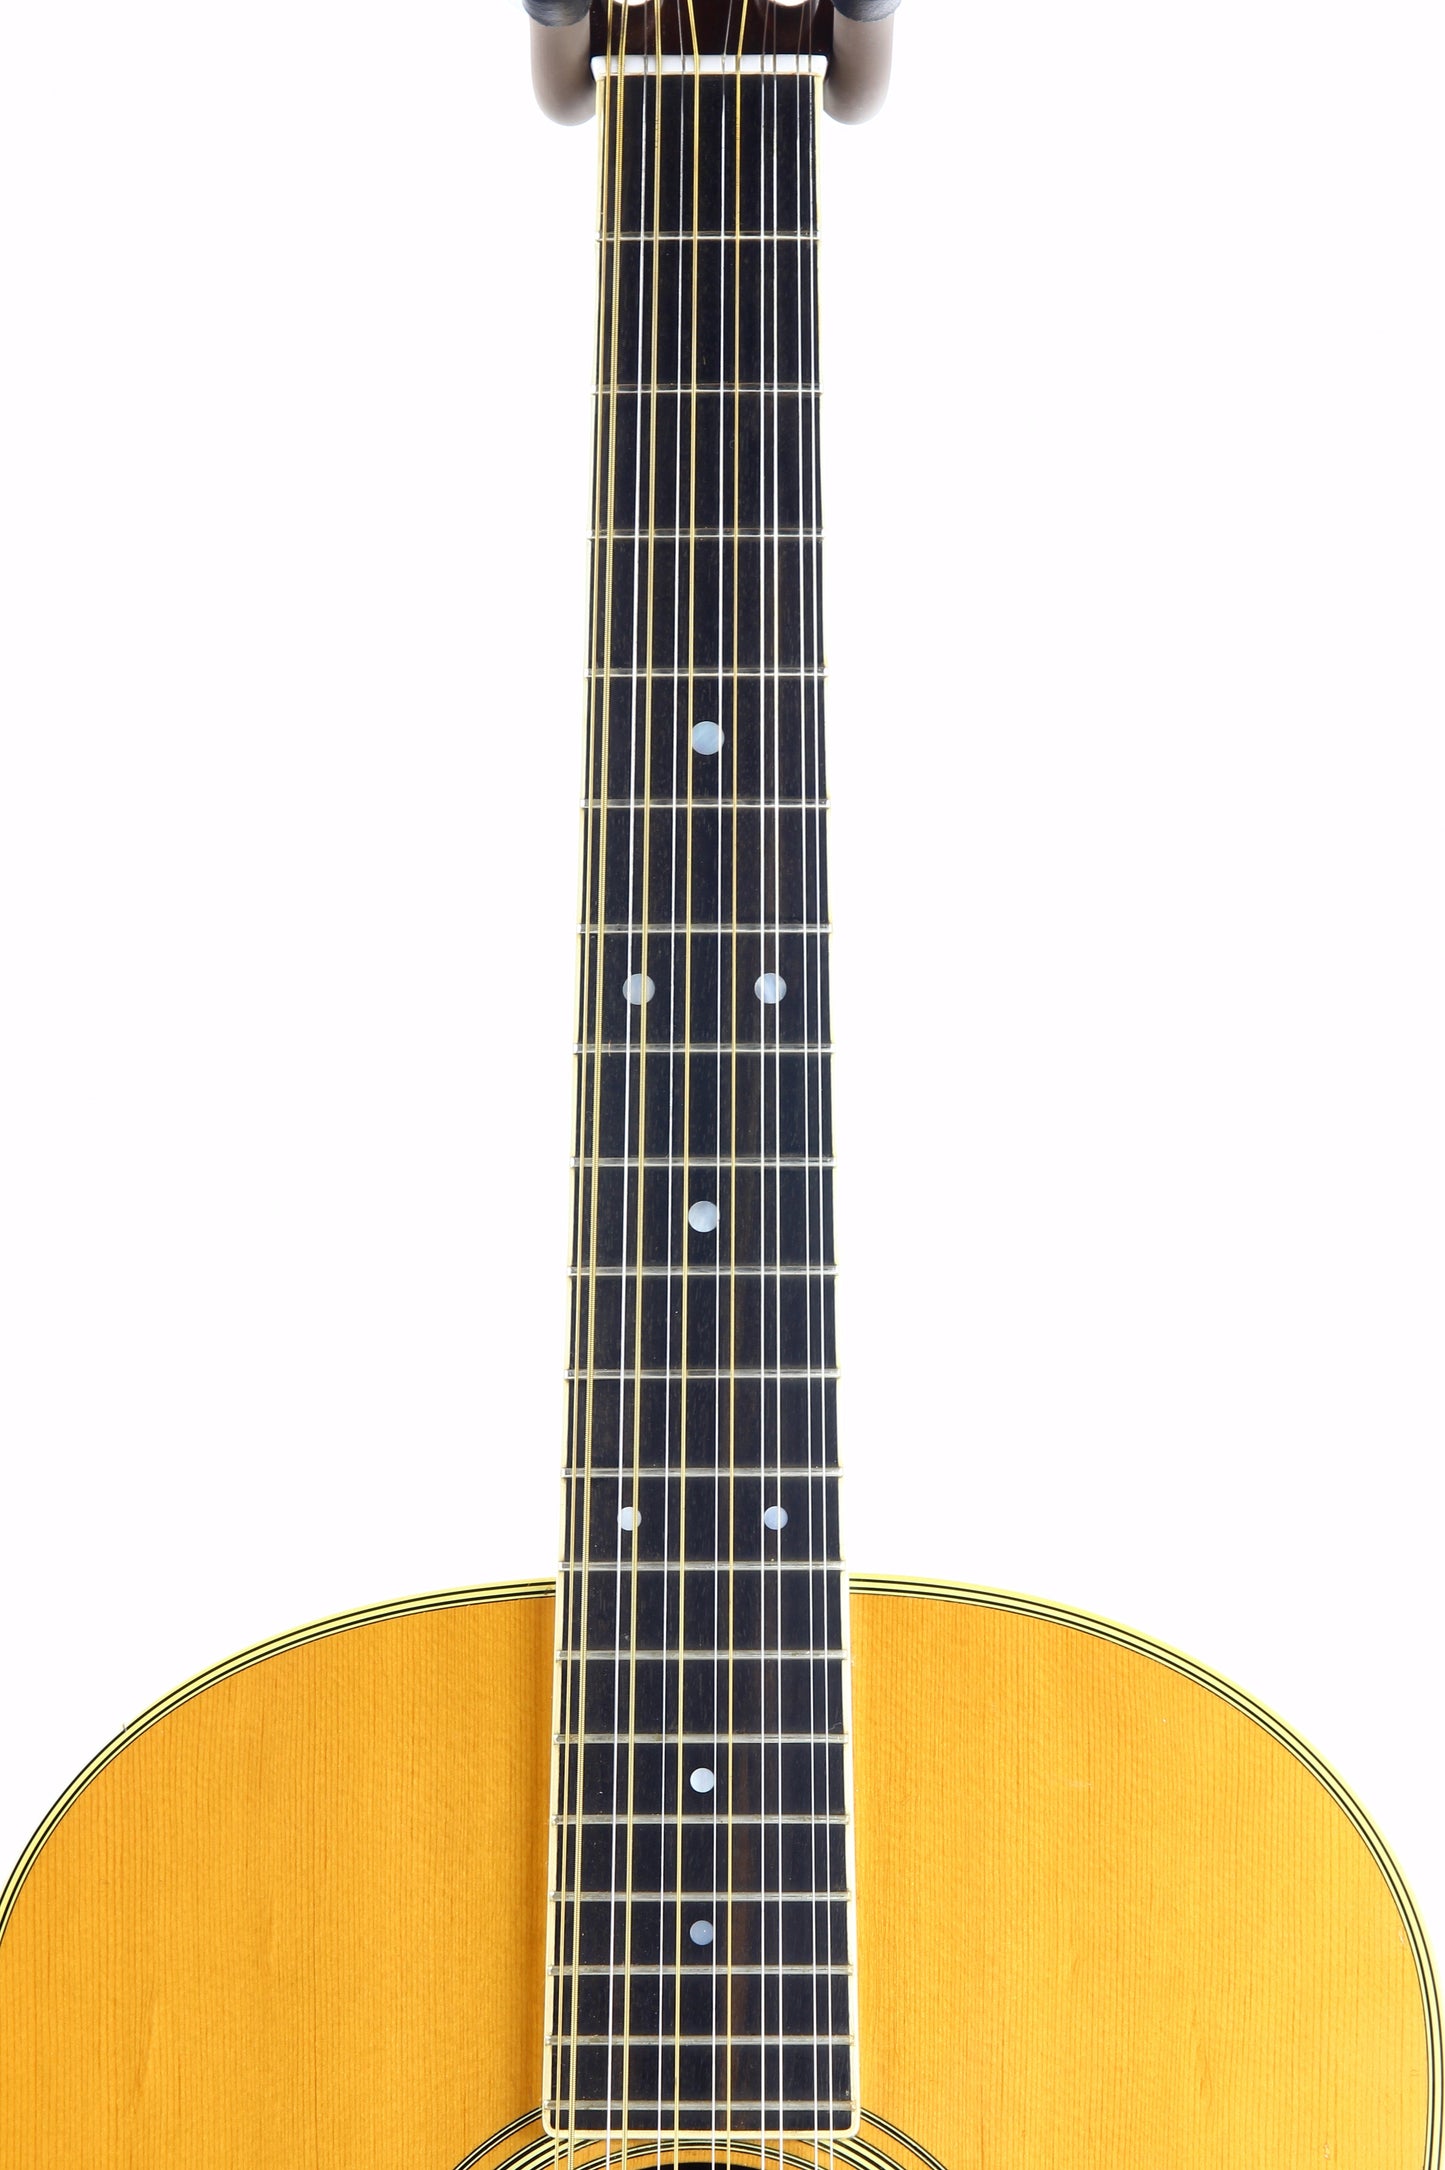 1974 Martin D-12-35 D35 12-String Vintage - 1970’s David Gilmour type